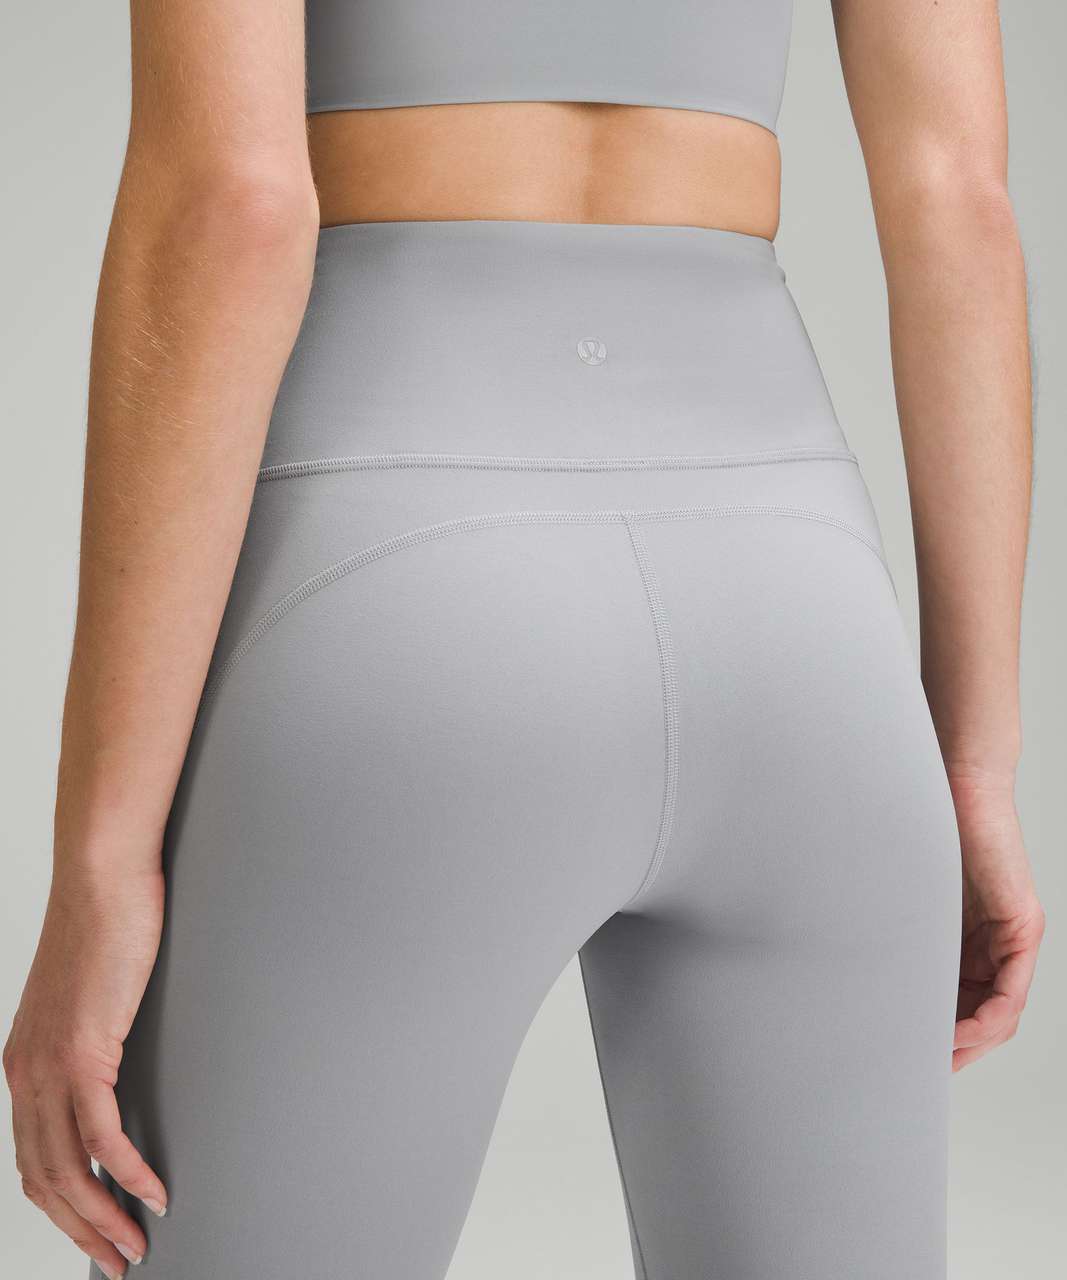 Lululemon Skinny Groove Pants Gray Size 4 - $56 - From Amaya